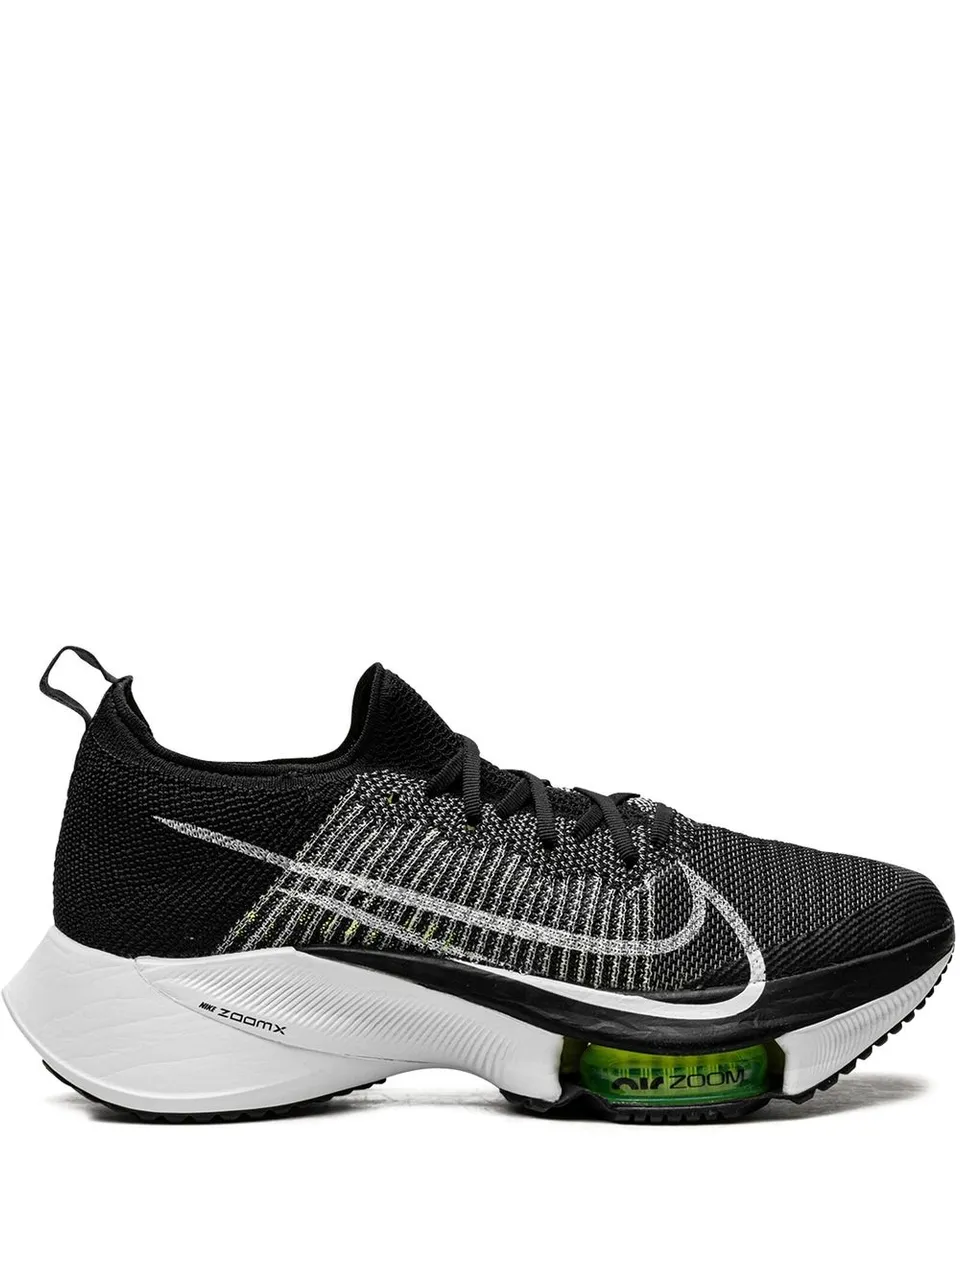 Nike Nike Air Zoom Tempo Next% Flyknit "Black/White/Volt" sneakers